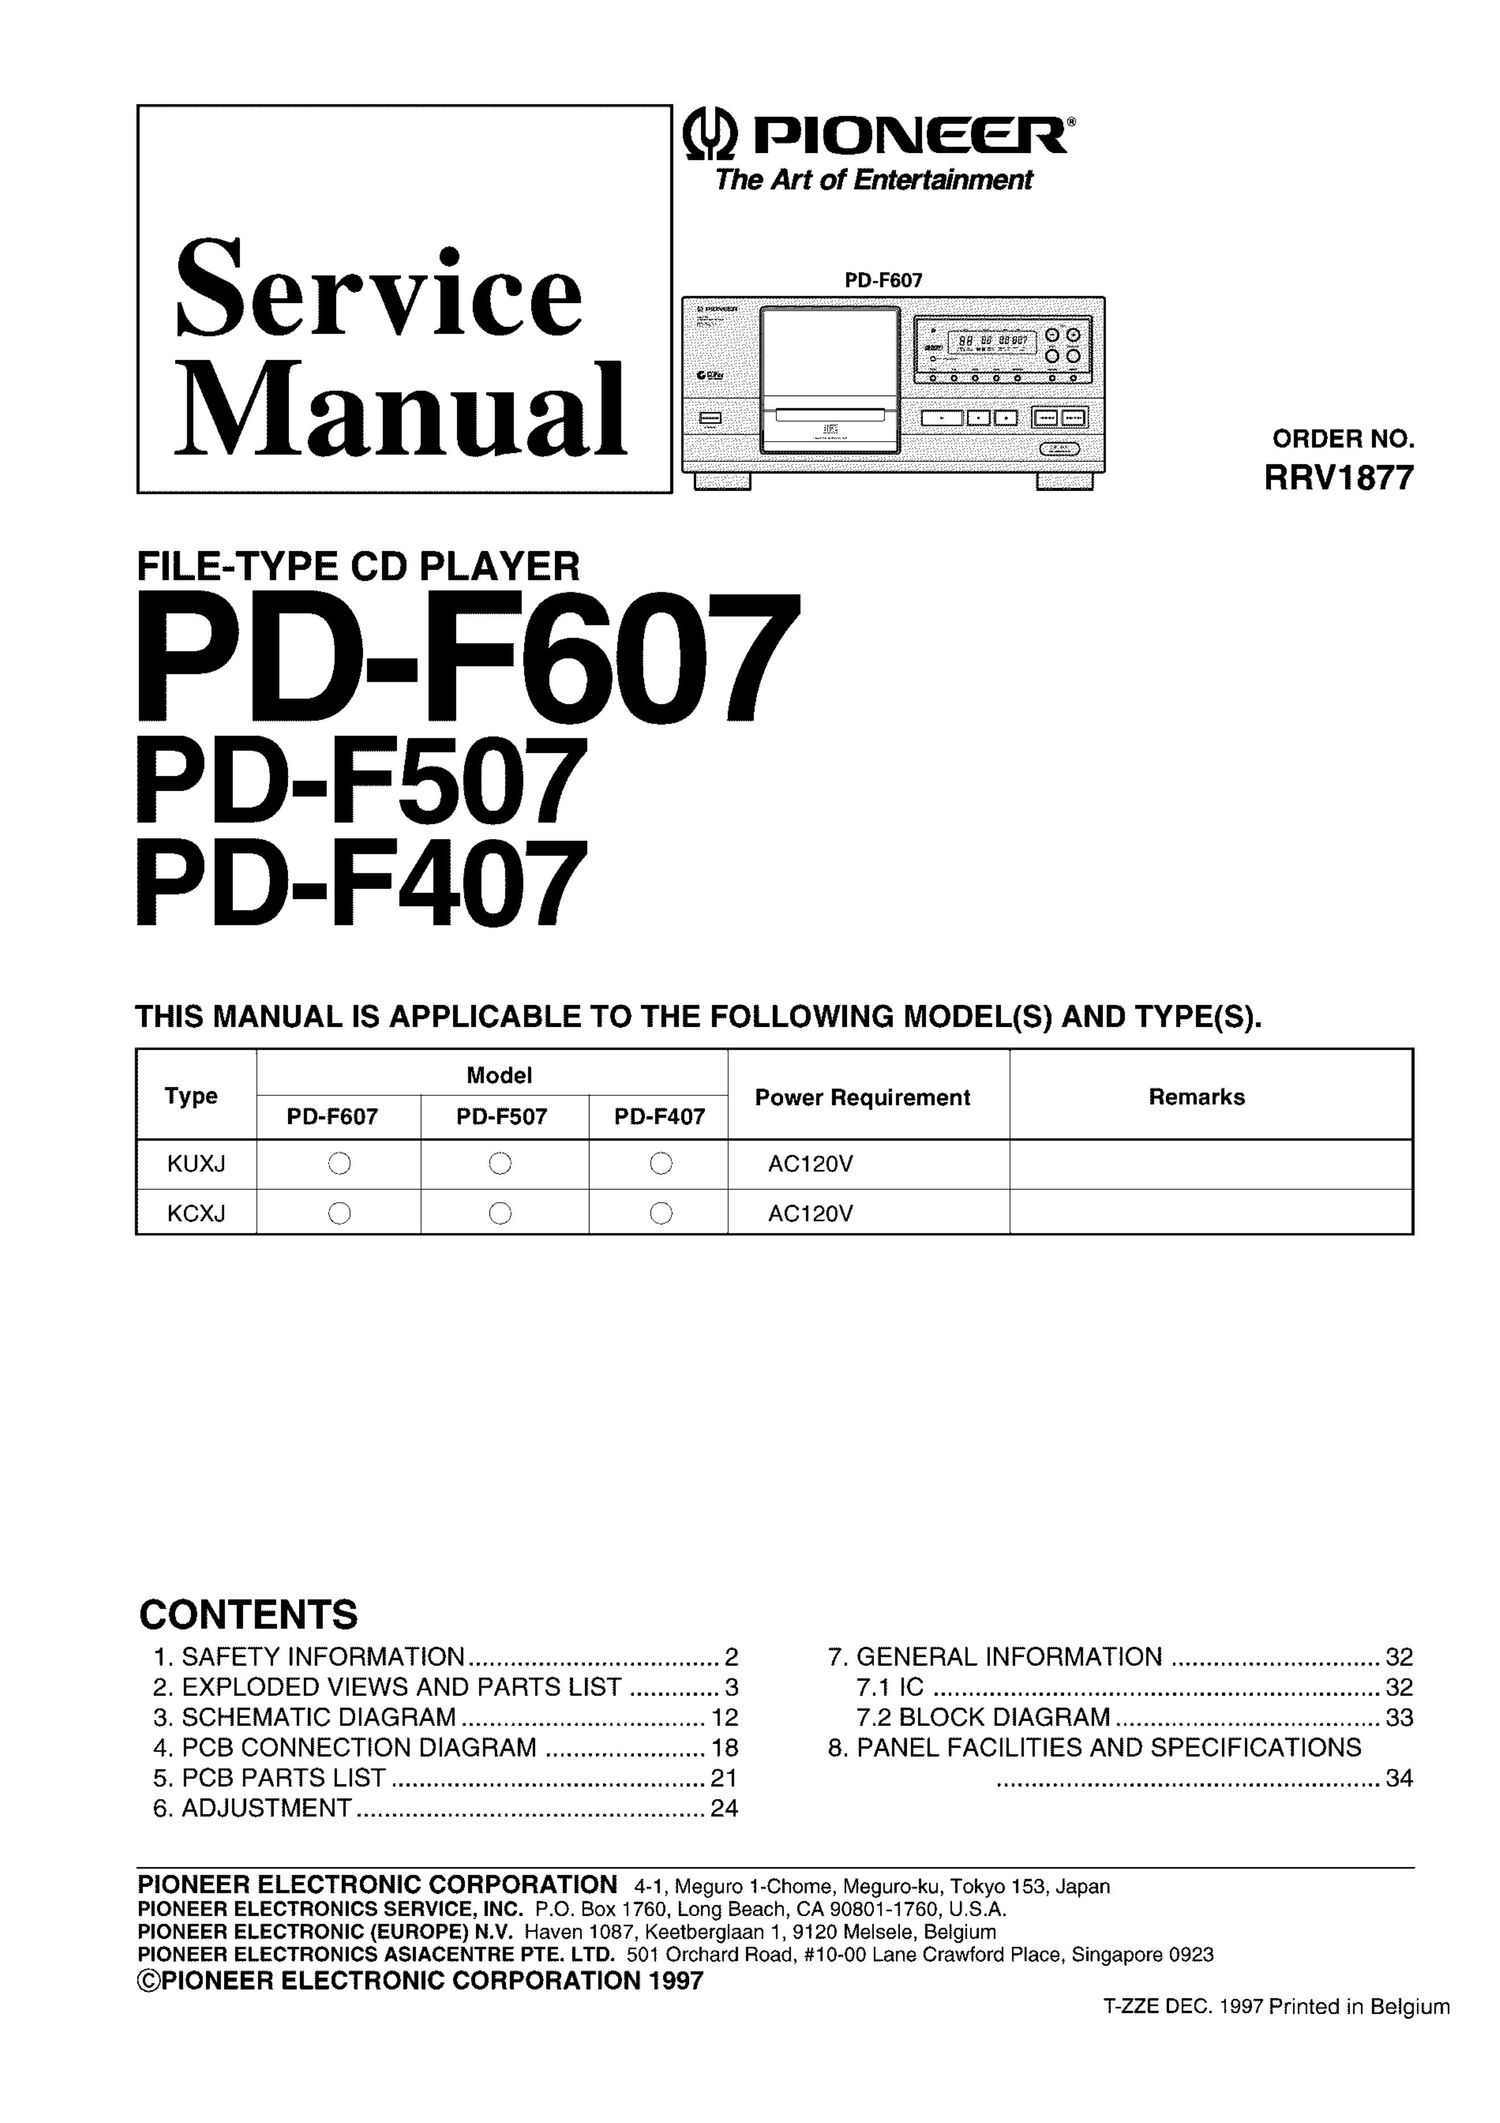 pioneer pdf 607 service manual